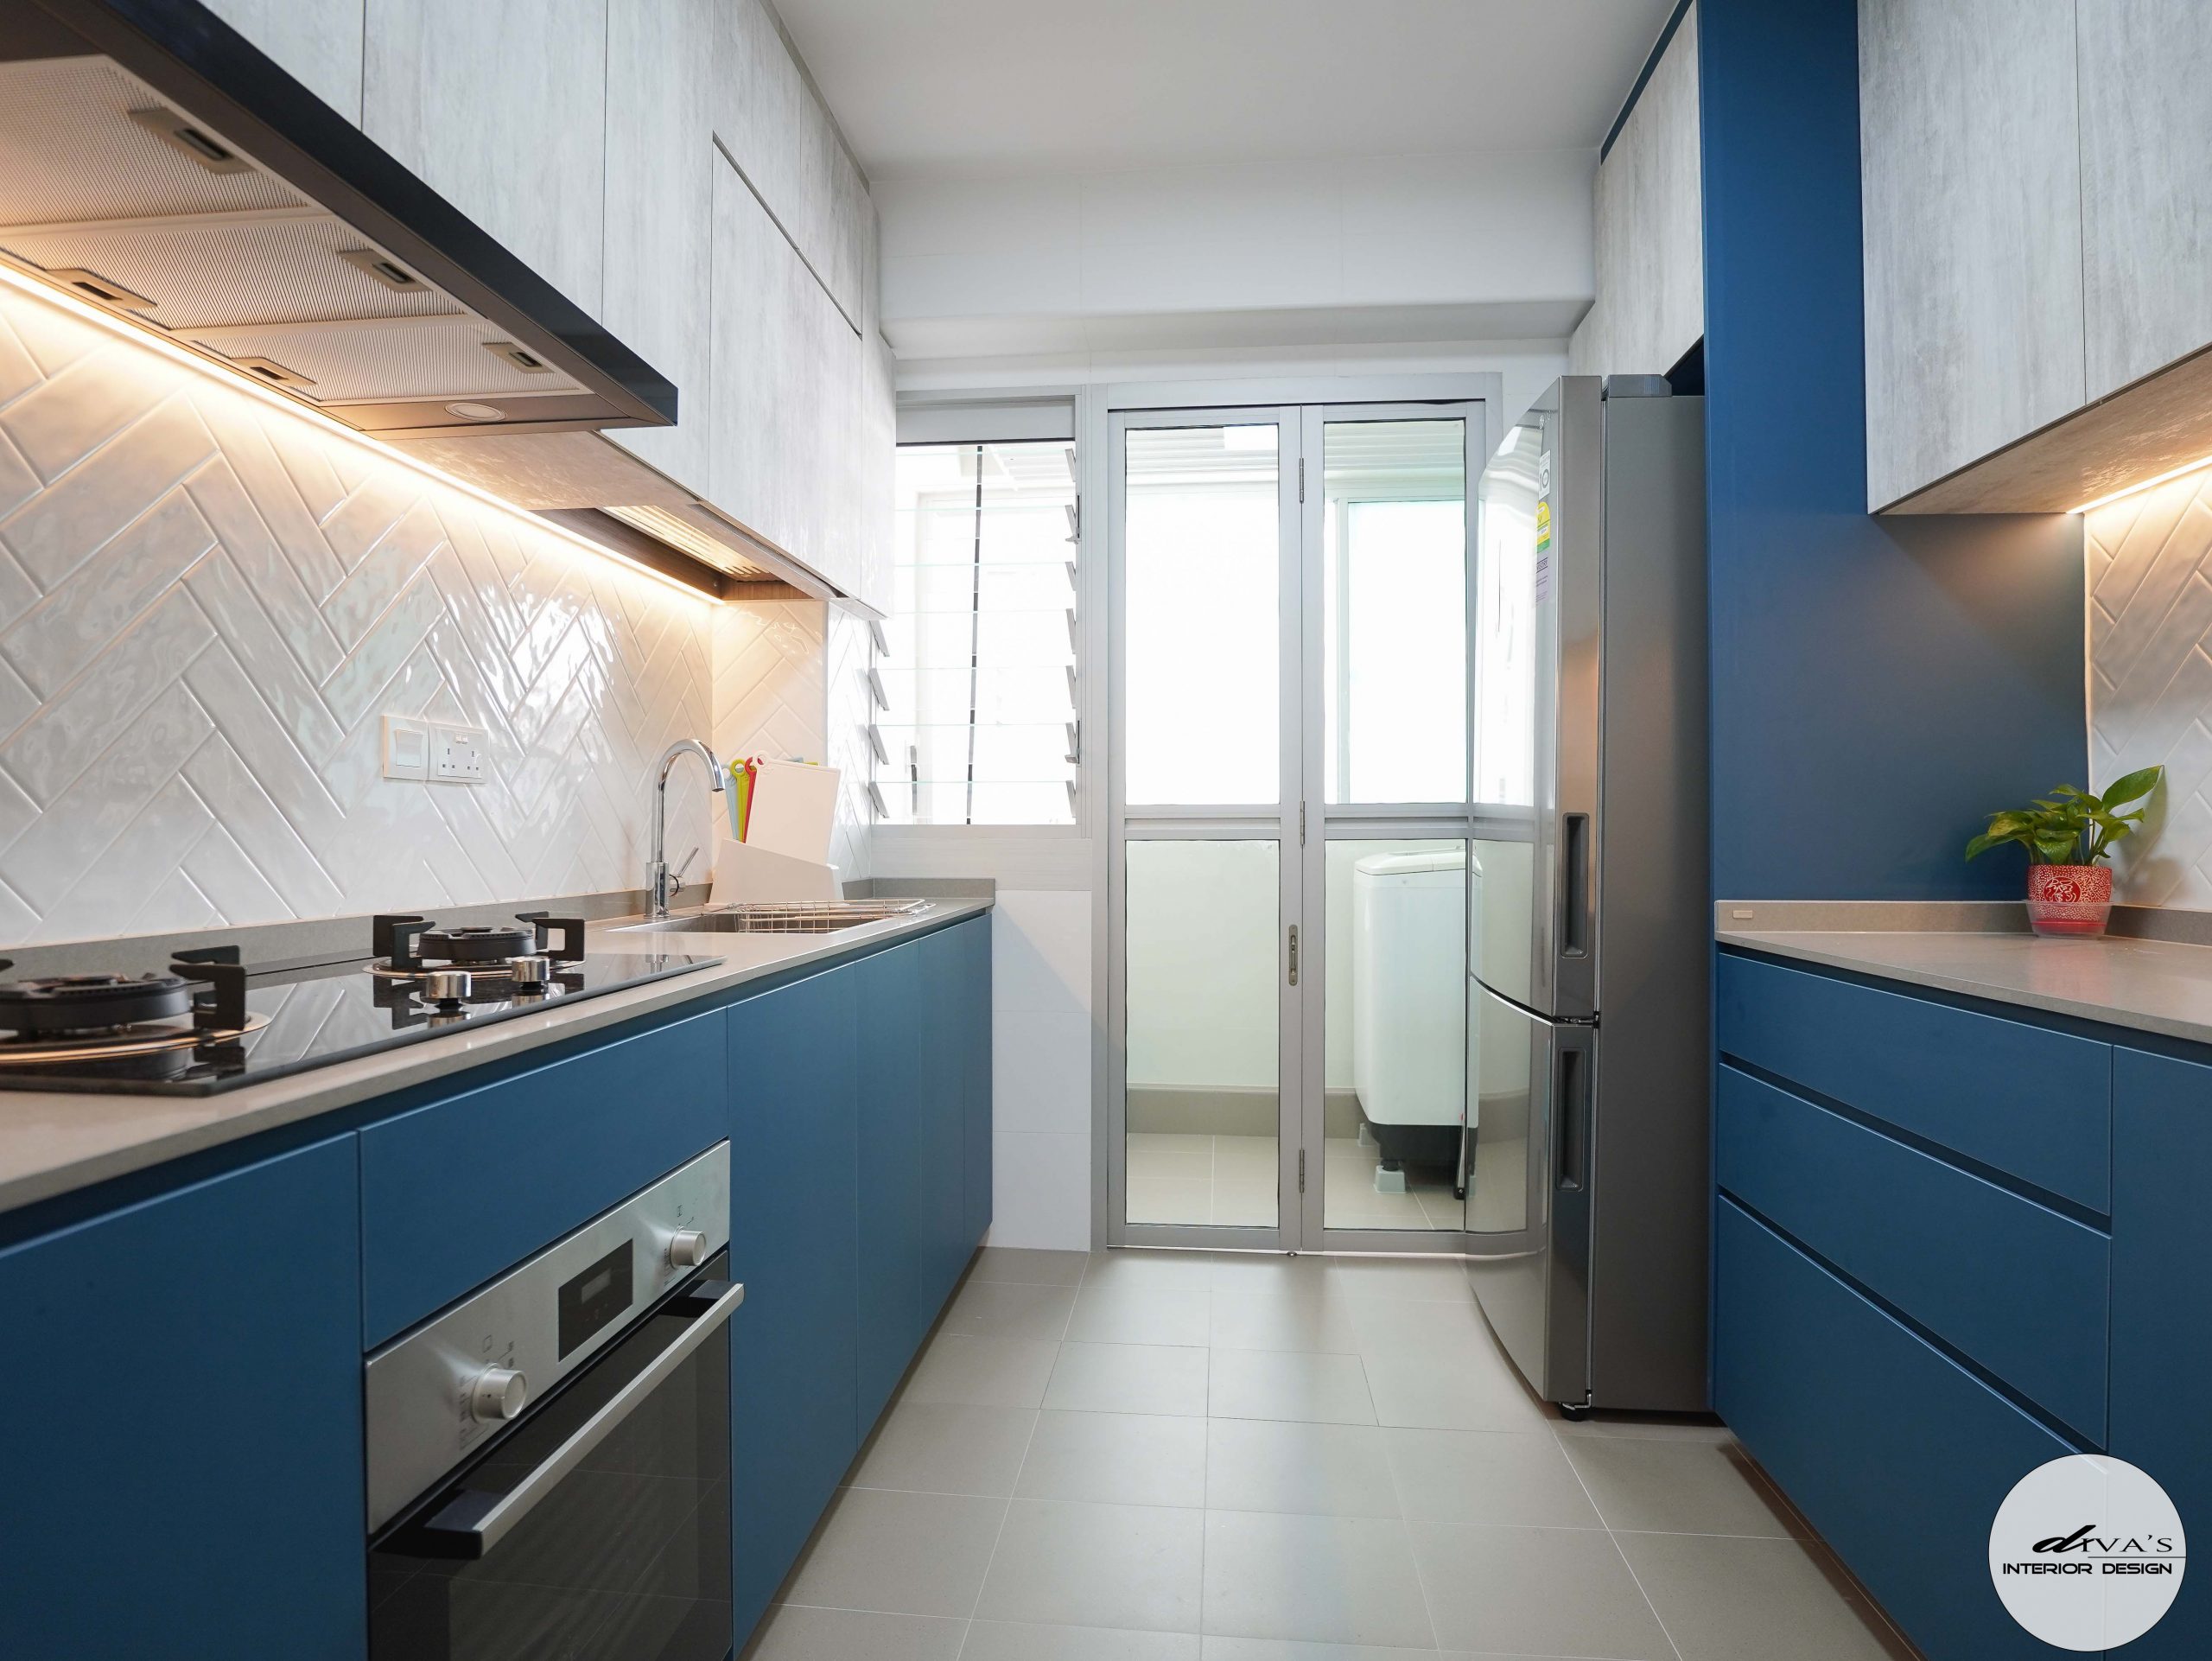 18 IKEA Inspired Kitchen Cabinets Singapore Design 18   Diva's ...